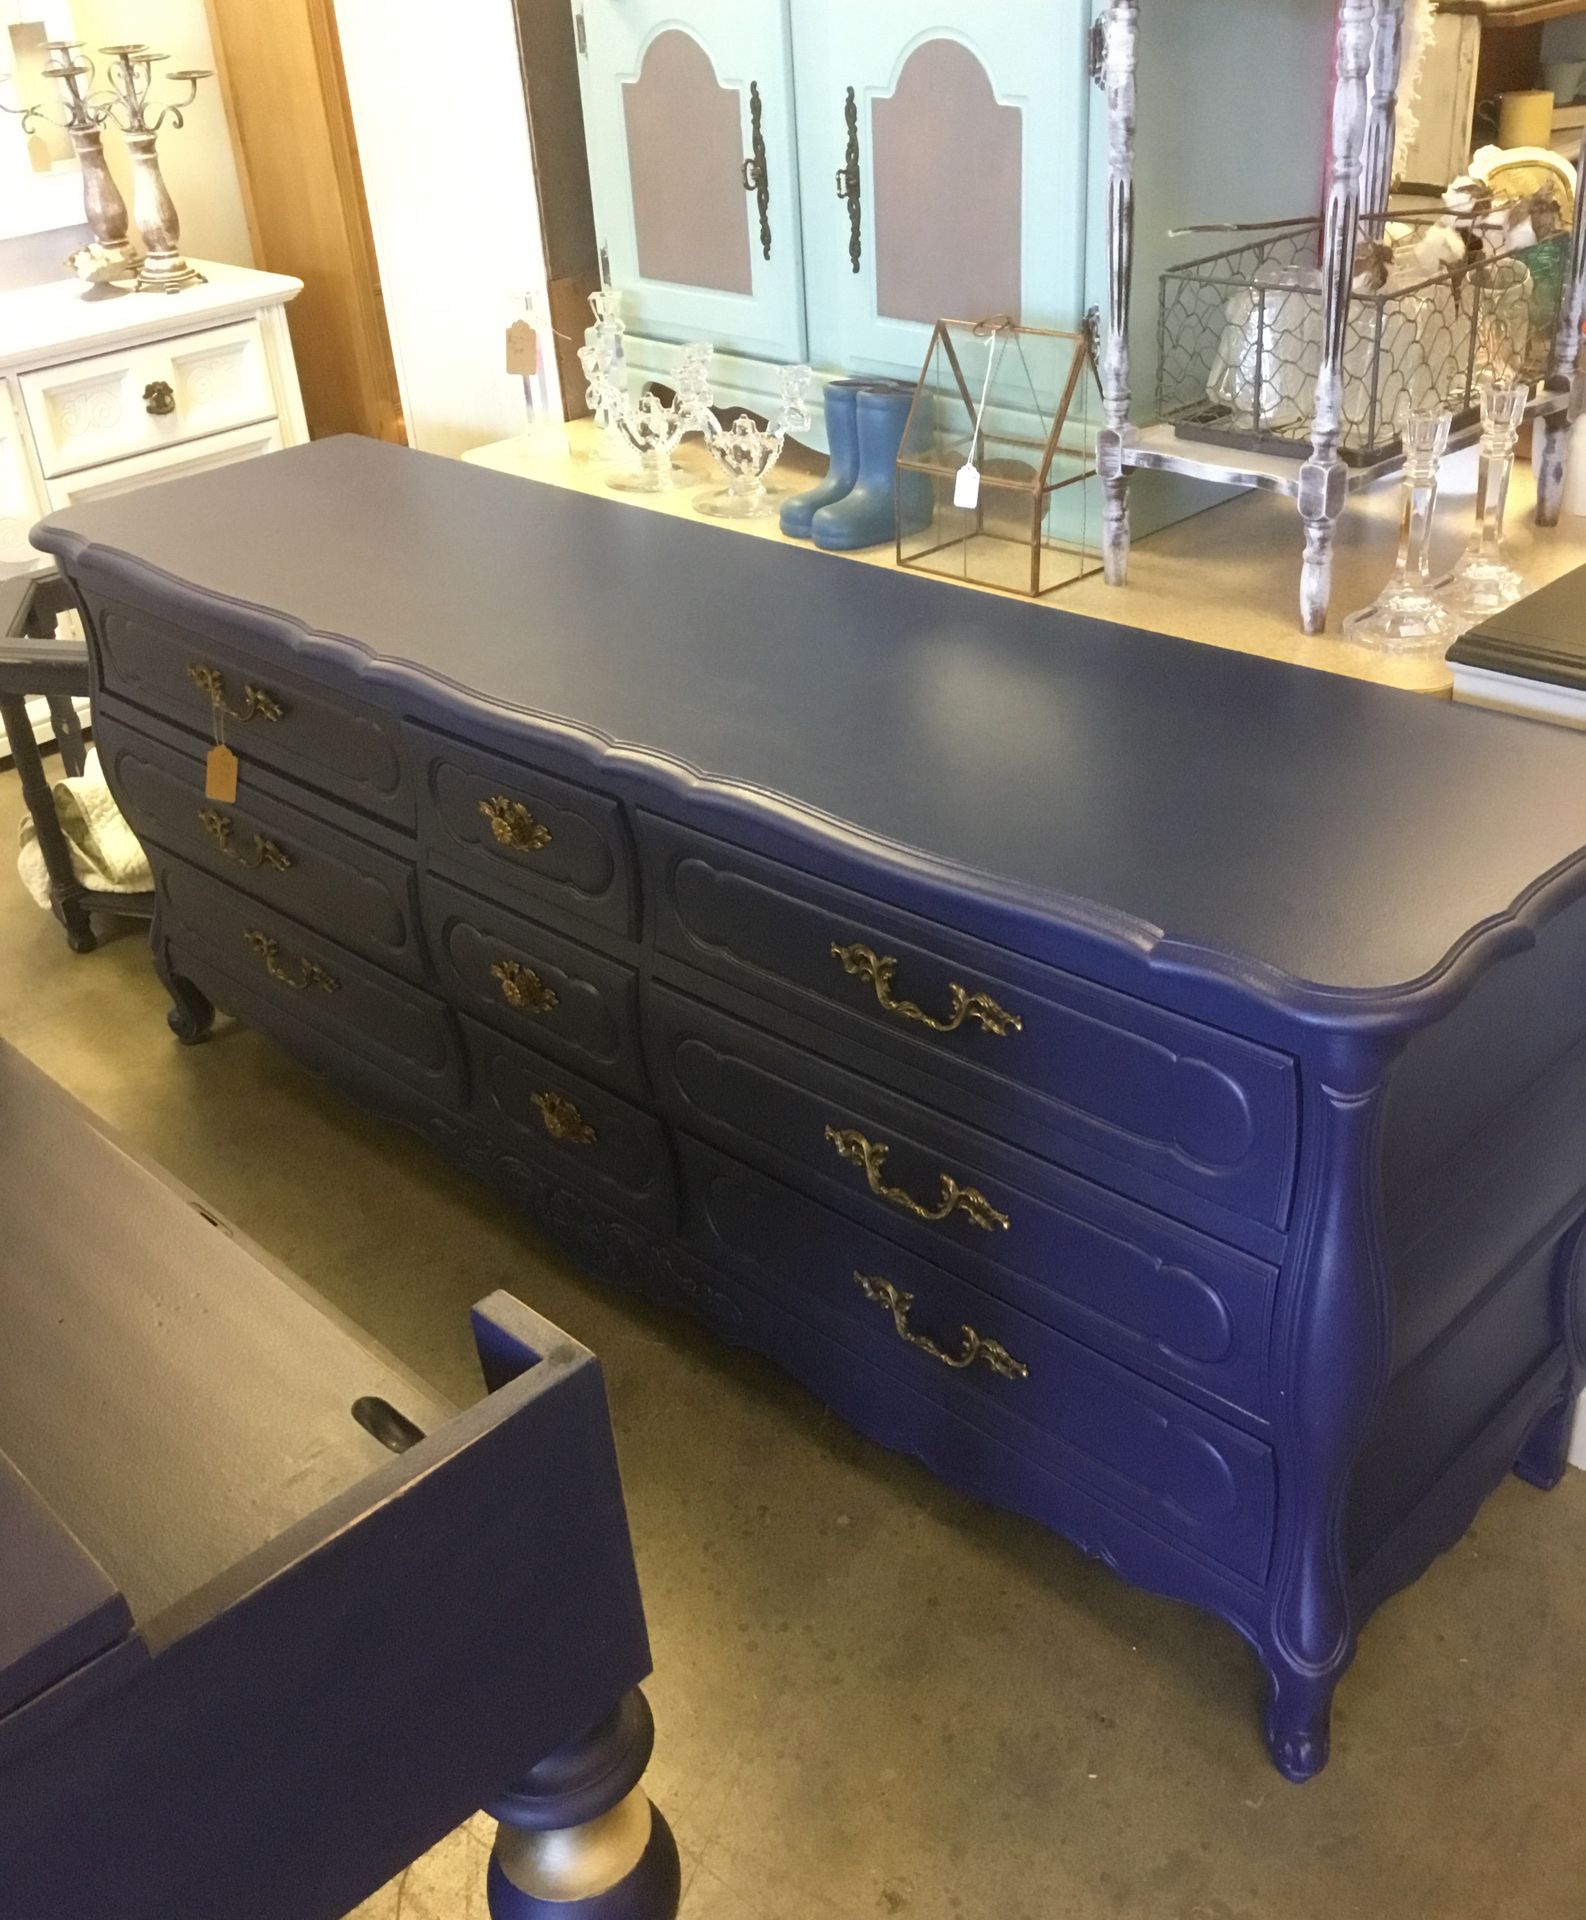 ❤️❤️Stunning Navy French provincial 9 drawer dresser with vintage hardware